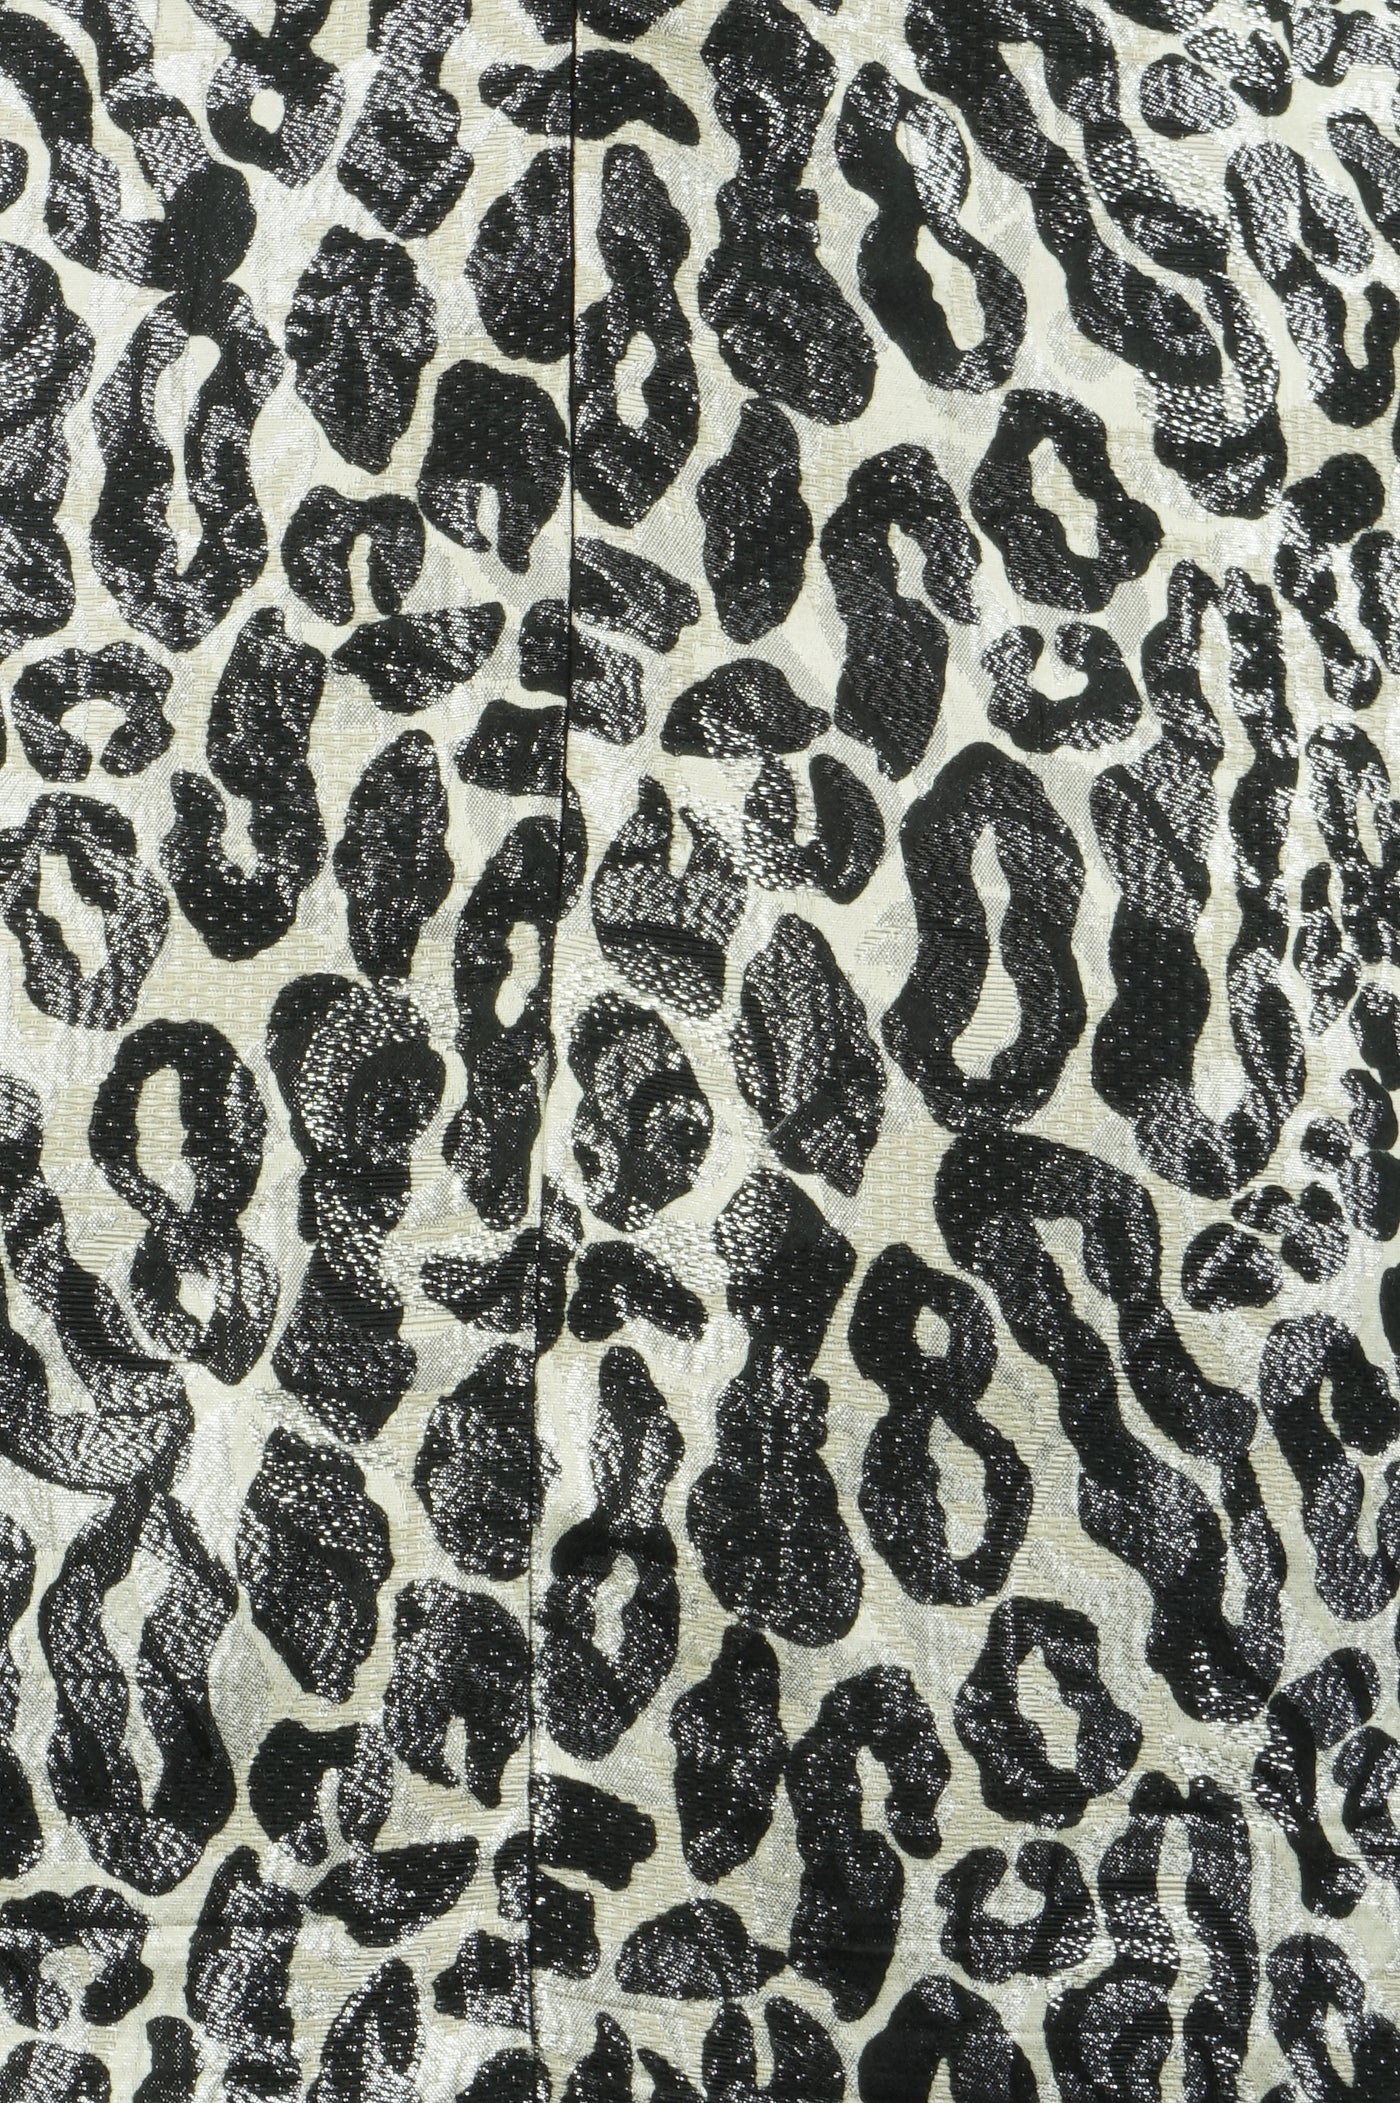 Silk shimmer leopard dress